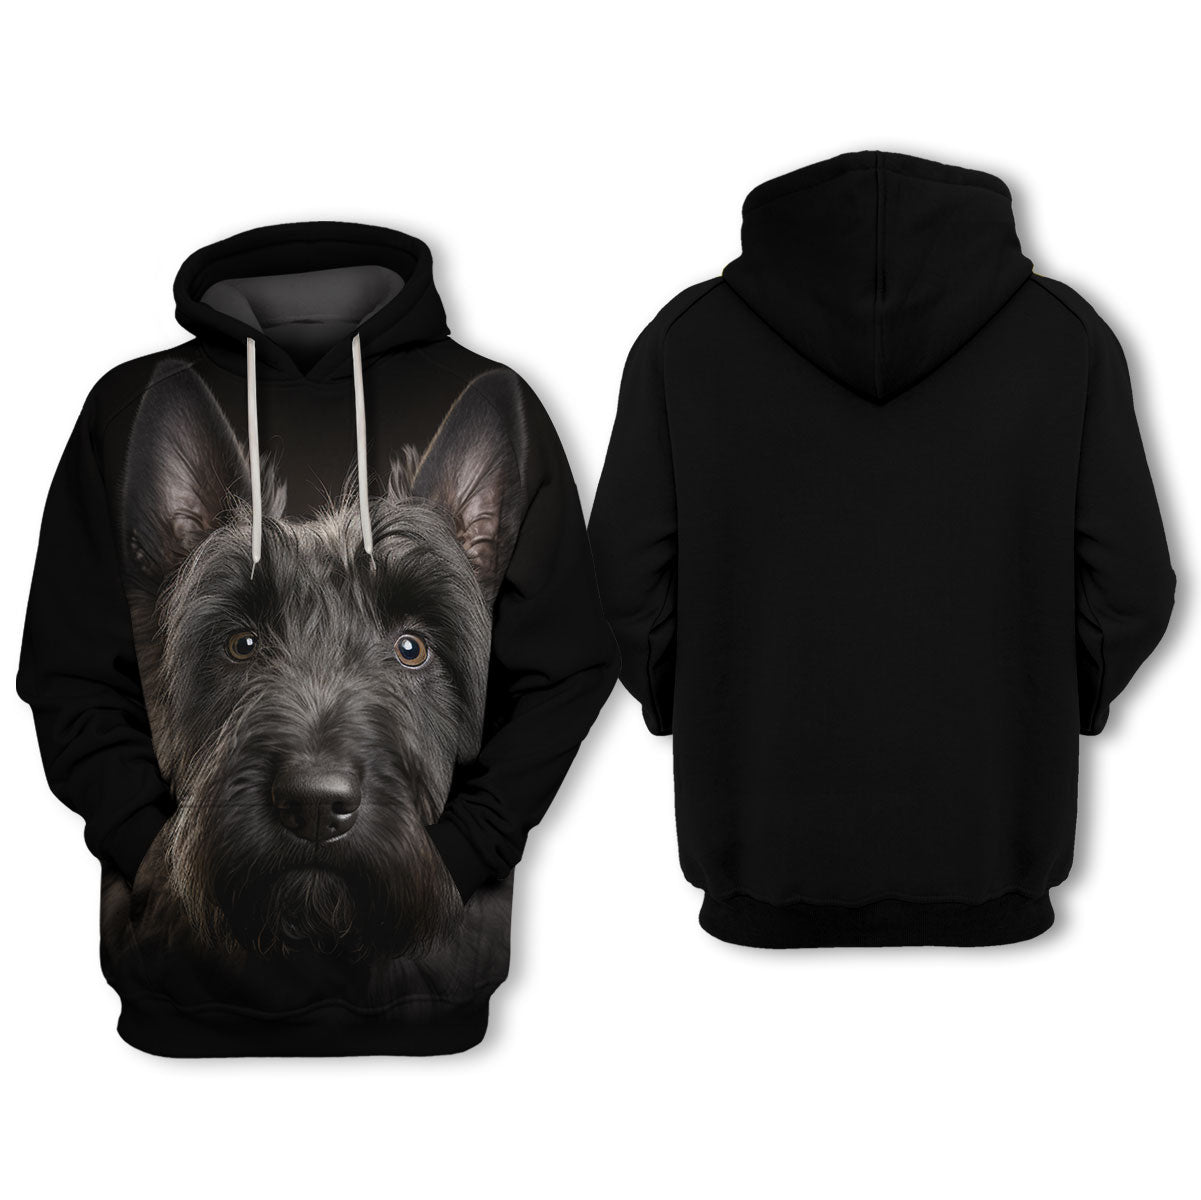 Scottish Terrier - Unisex 3D Graphic Hoodie